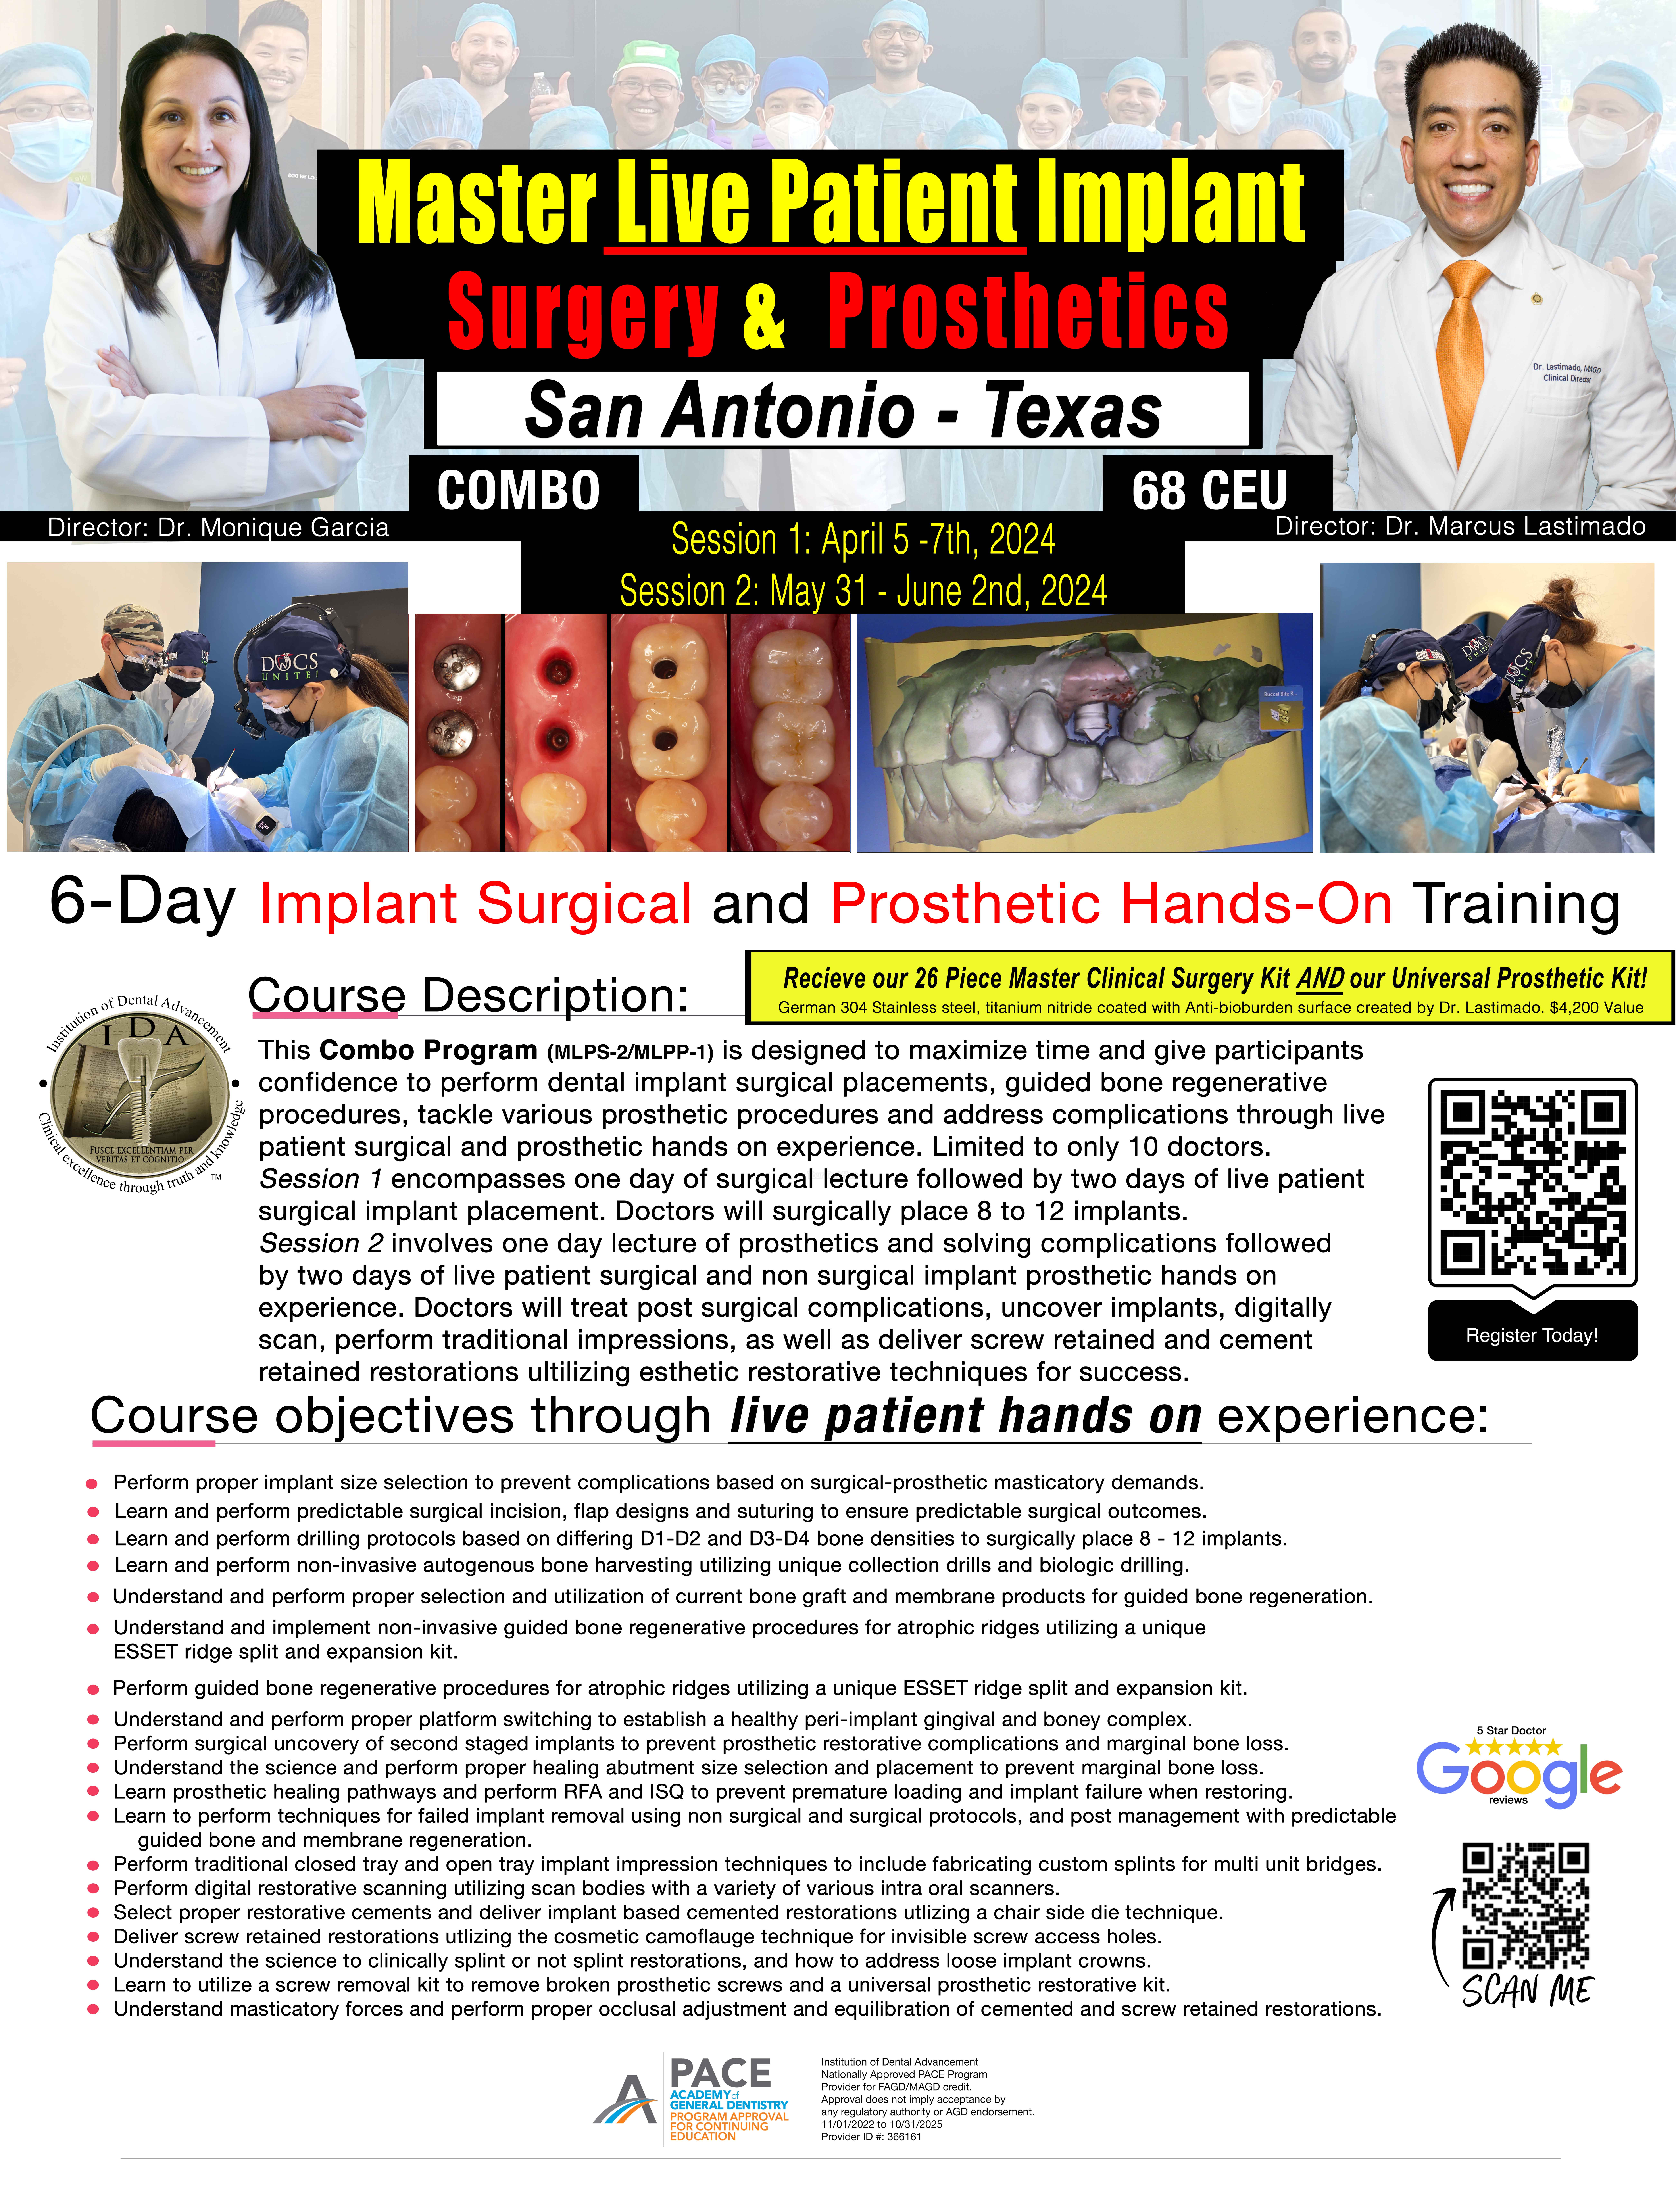 dental implant surgical prosthetic training course in san antonio texas